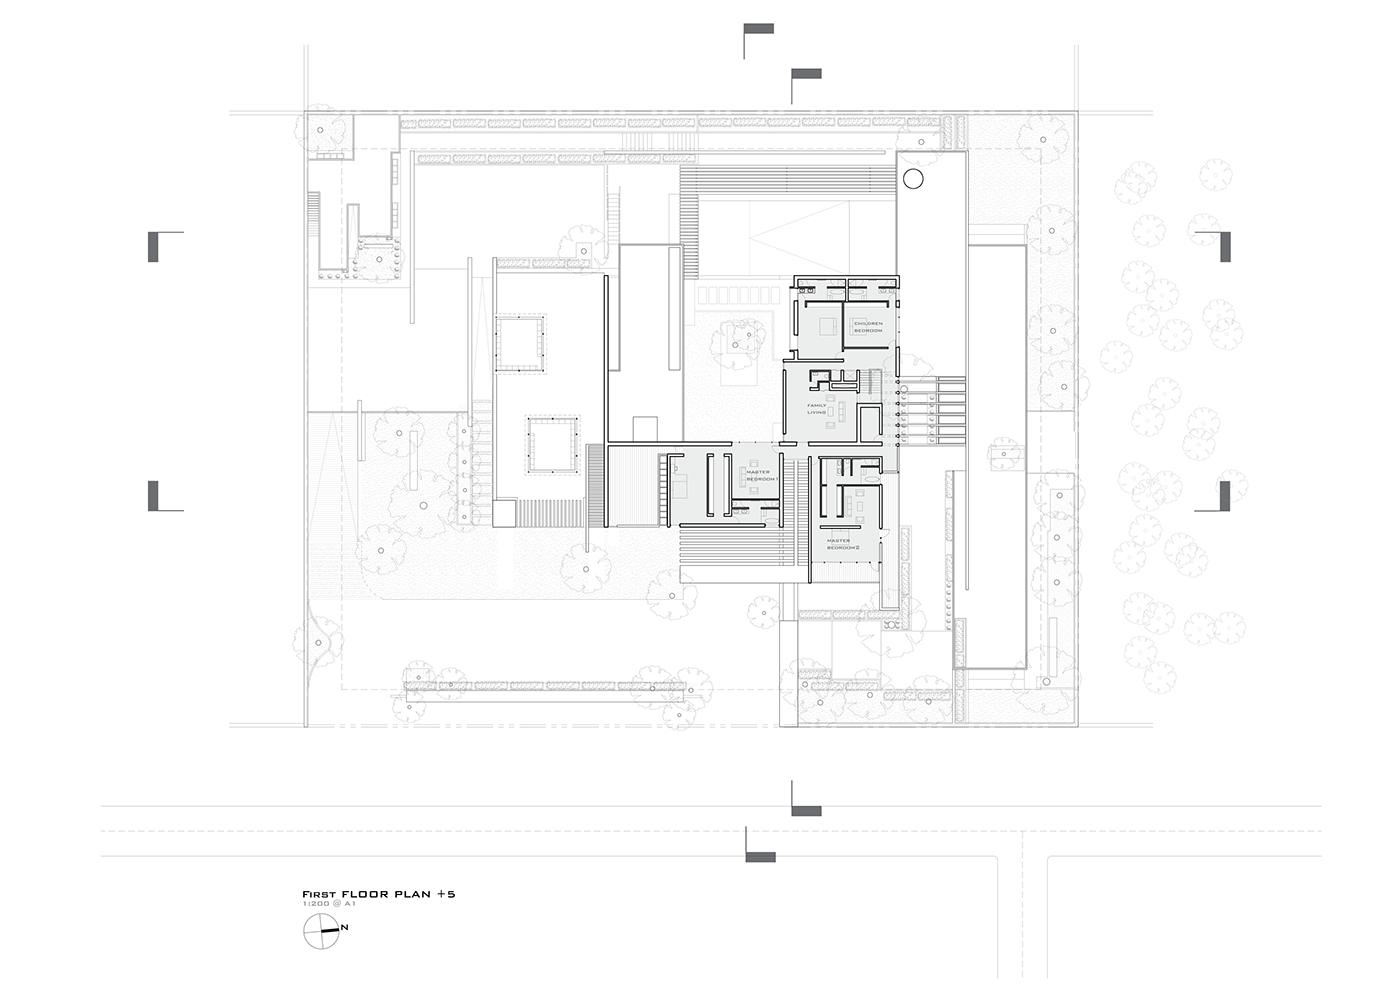 Adobe Portfolio villa design landscaping Pool courtyard Emirati housing drawings design dubai u.a.e Freelance freelance architect 